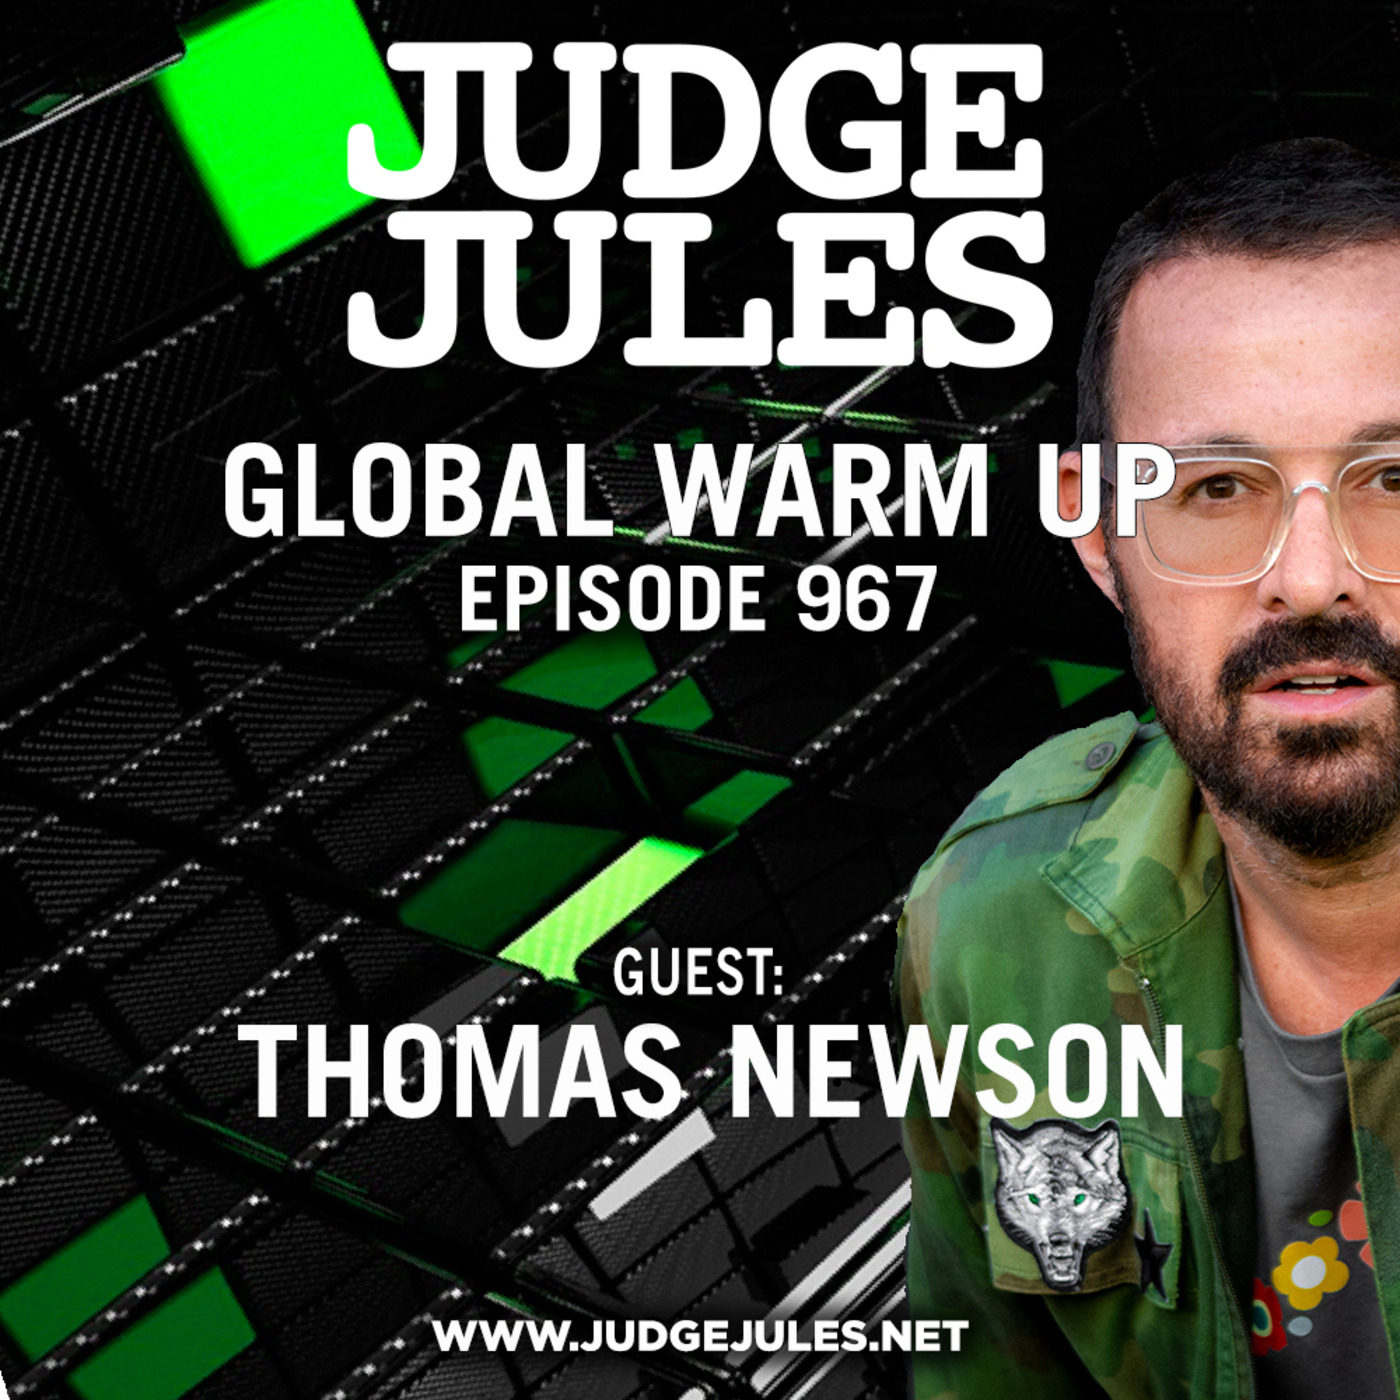 Episode 967: JUDGE JULES PRESENTS THE GLOBAL WARM UP EPISODE 967